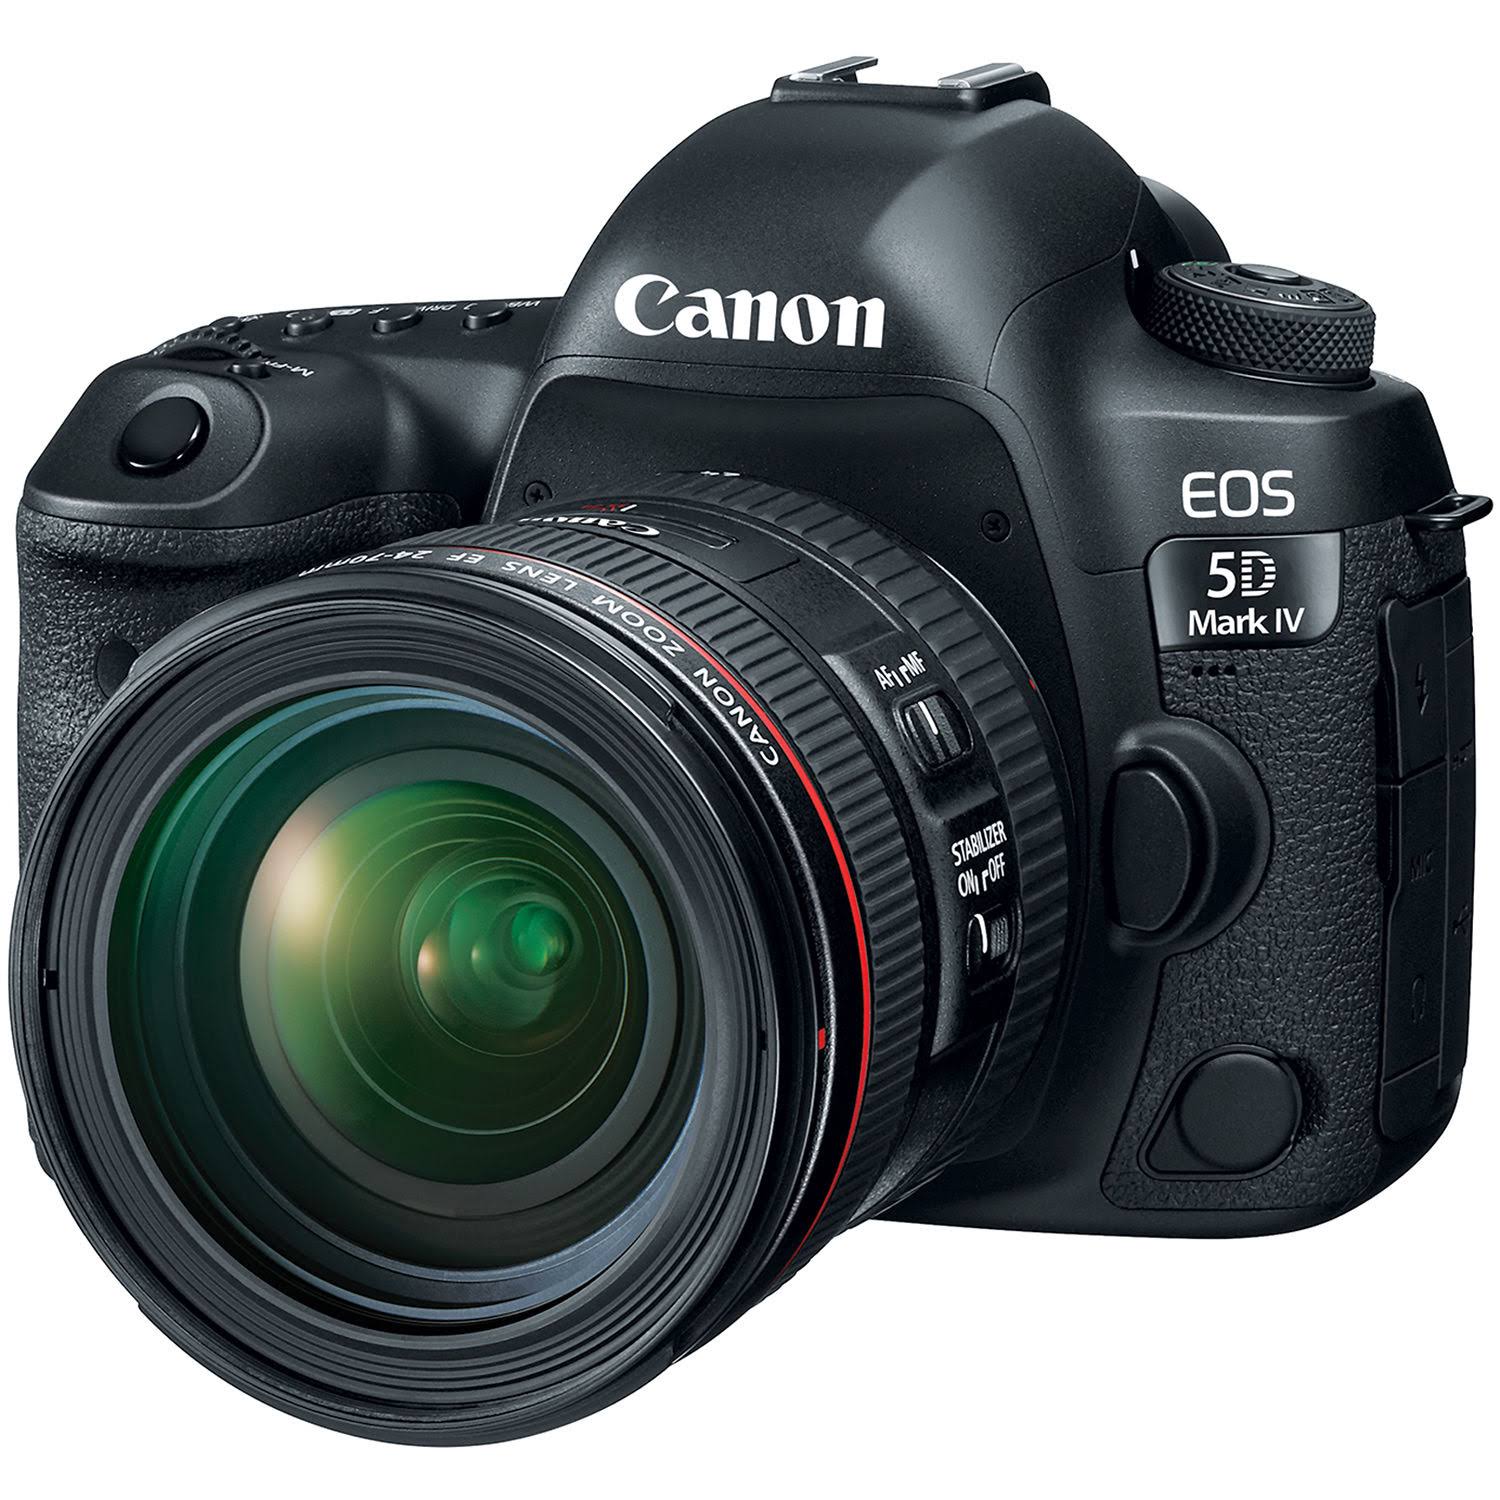 Canon Digitale Spiegelreflexkamera EOS 5D Mark IV mit EF 24-70 mm 1: 4L IS USM-Objektivsatz